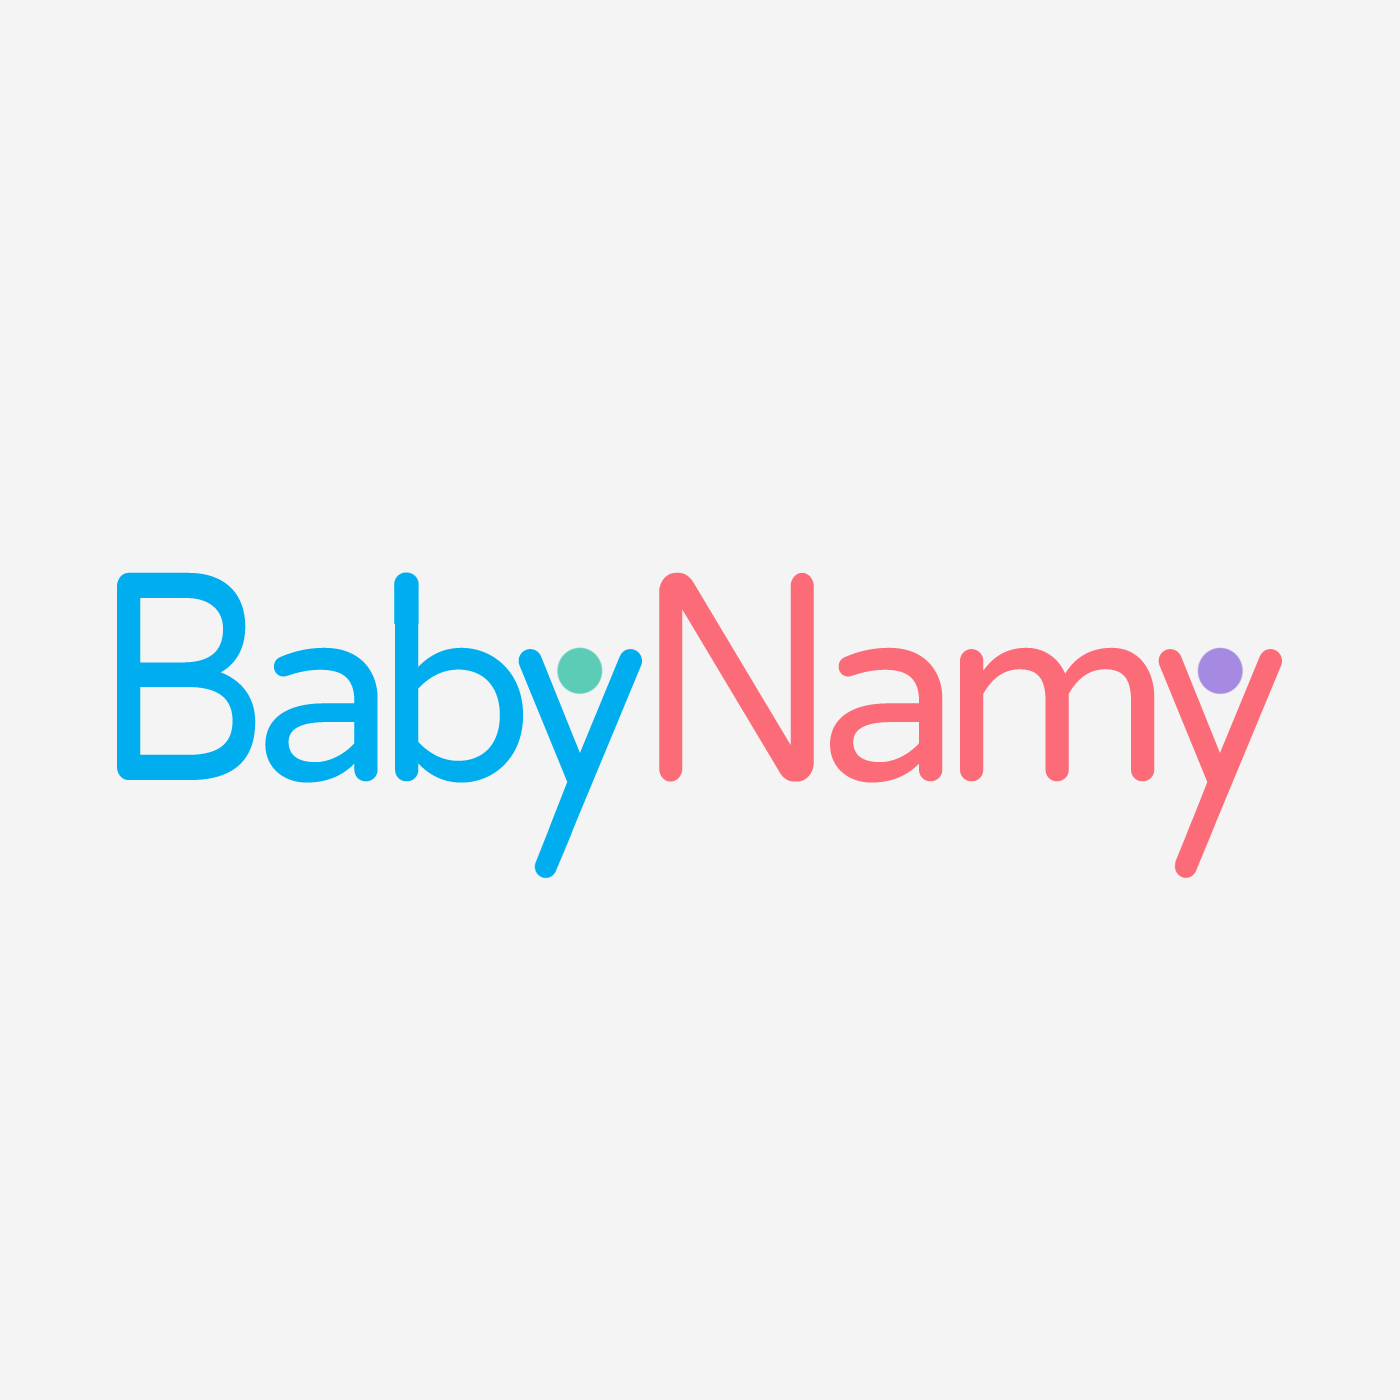 user BabyNamy's profile picture